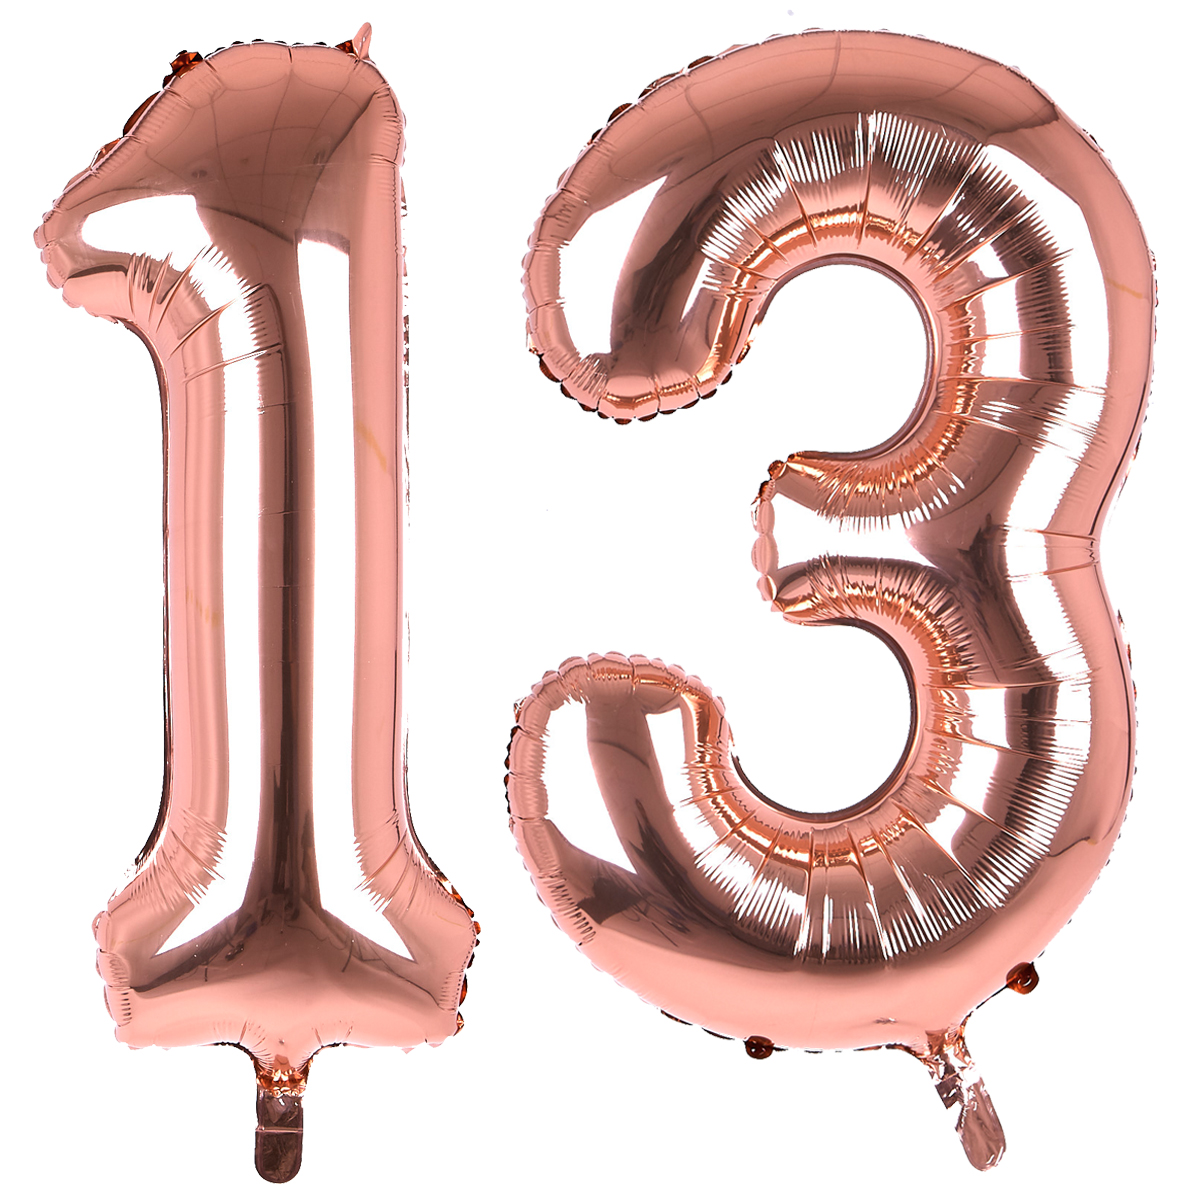 age 13 balloons